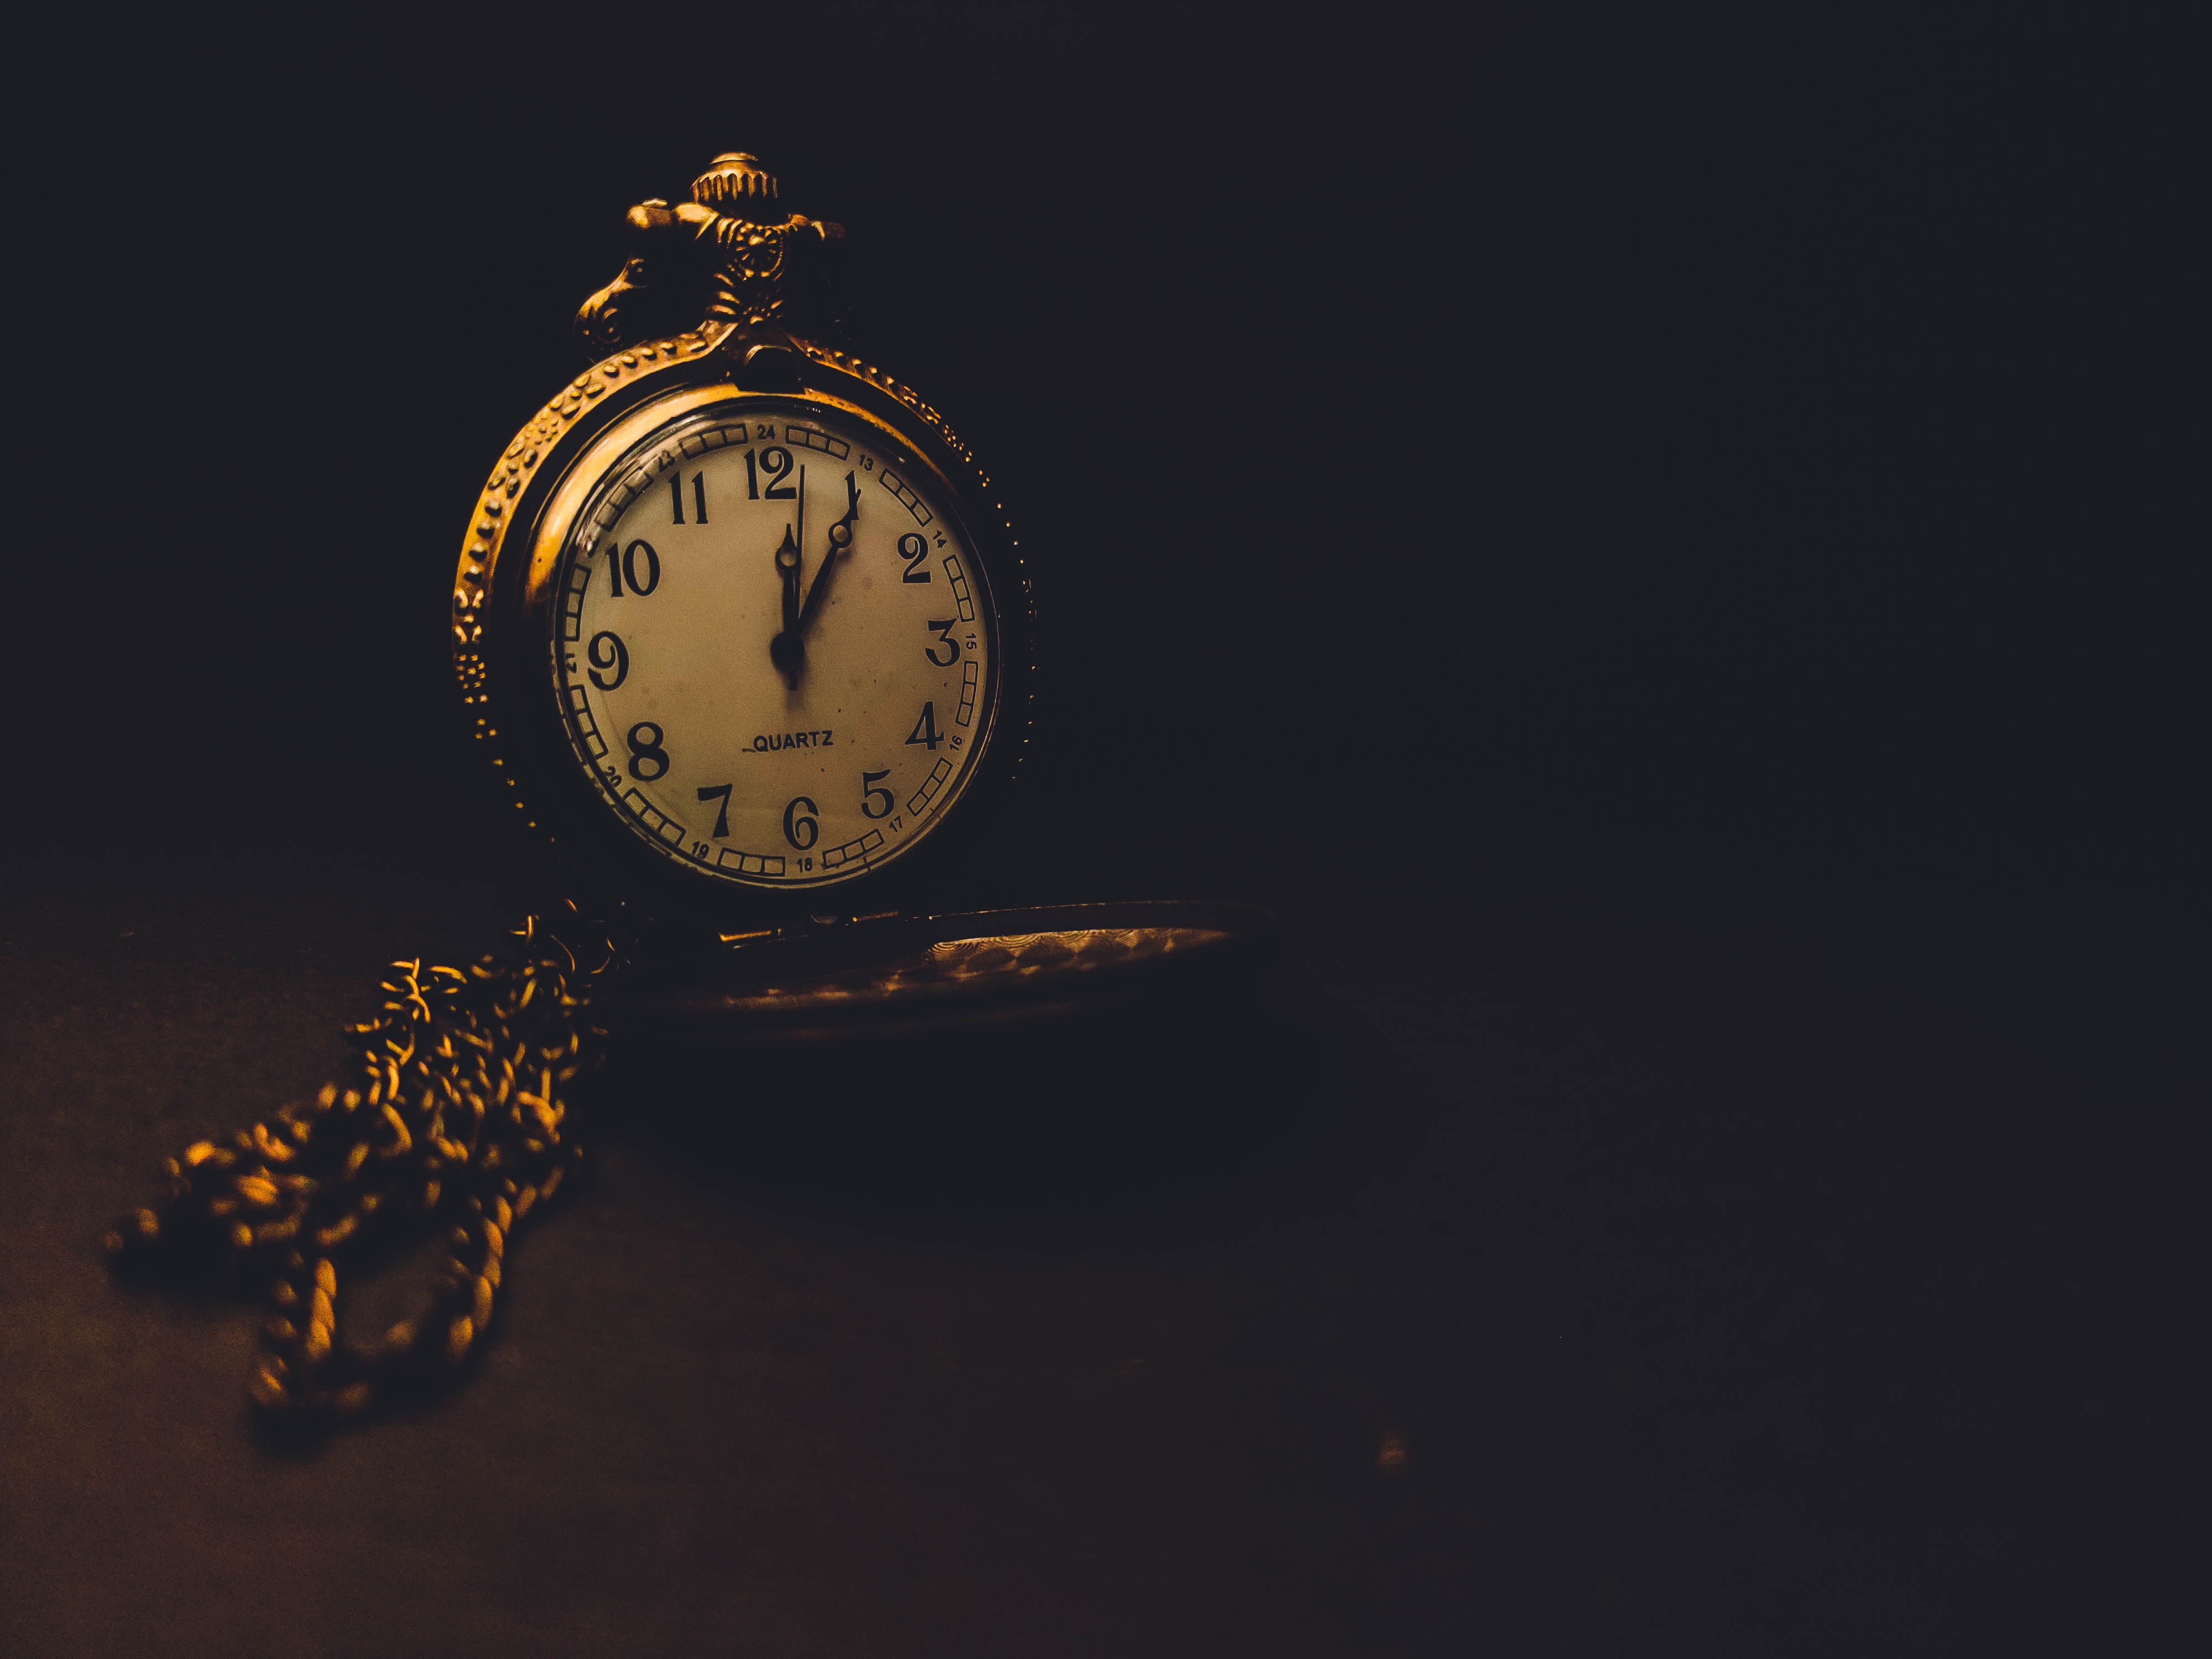 Stylish old fashioned clock on dark background · Free